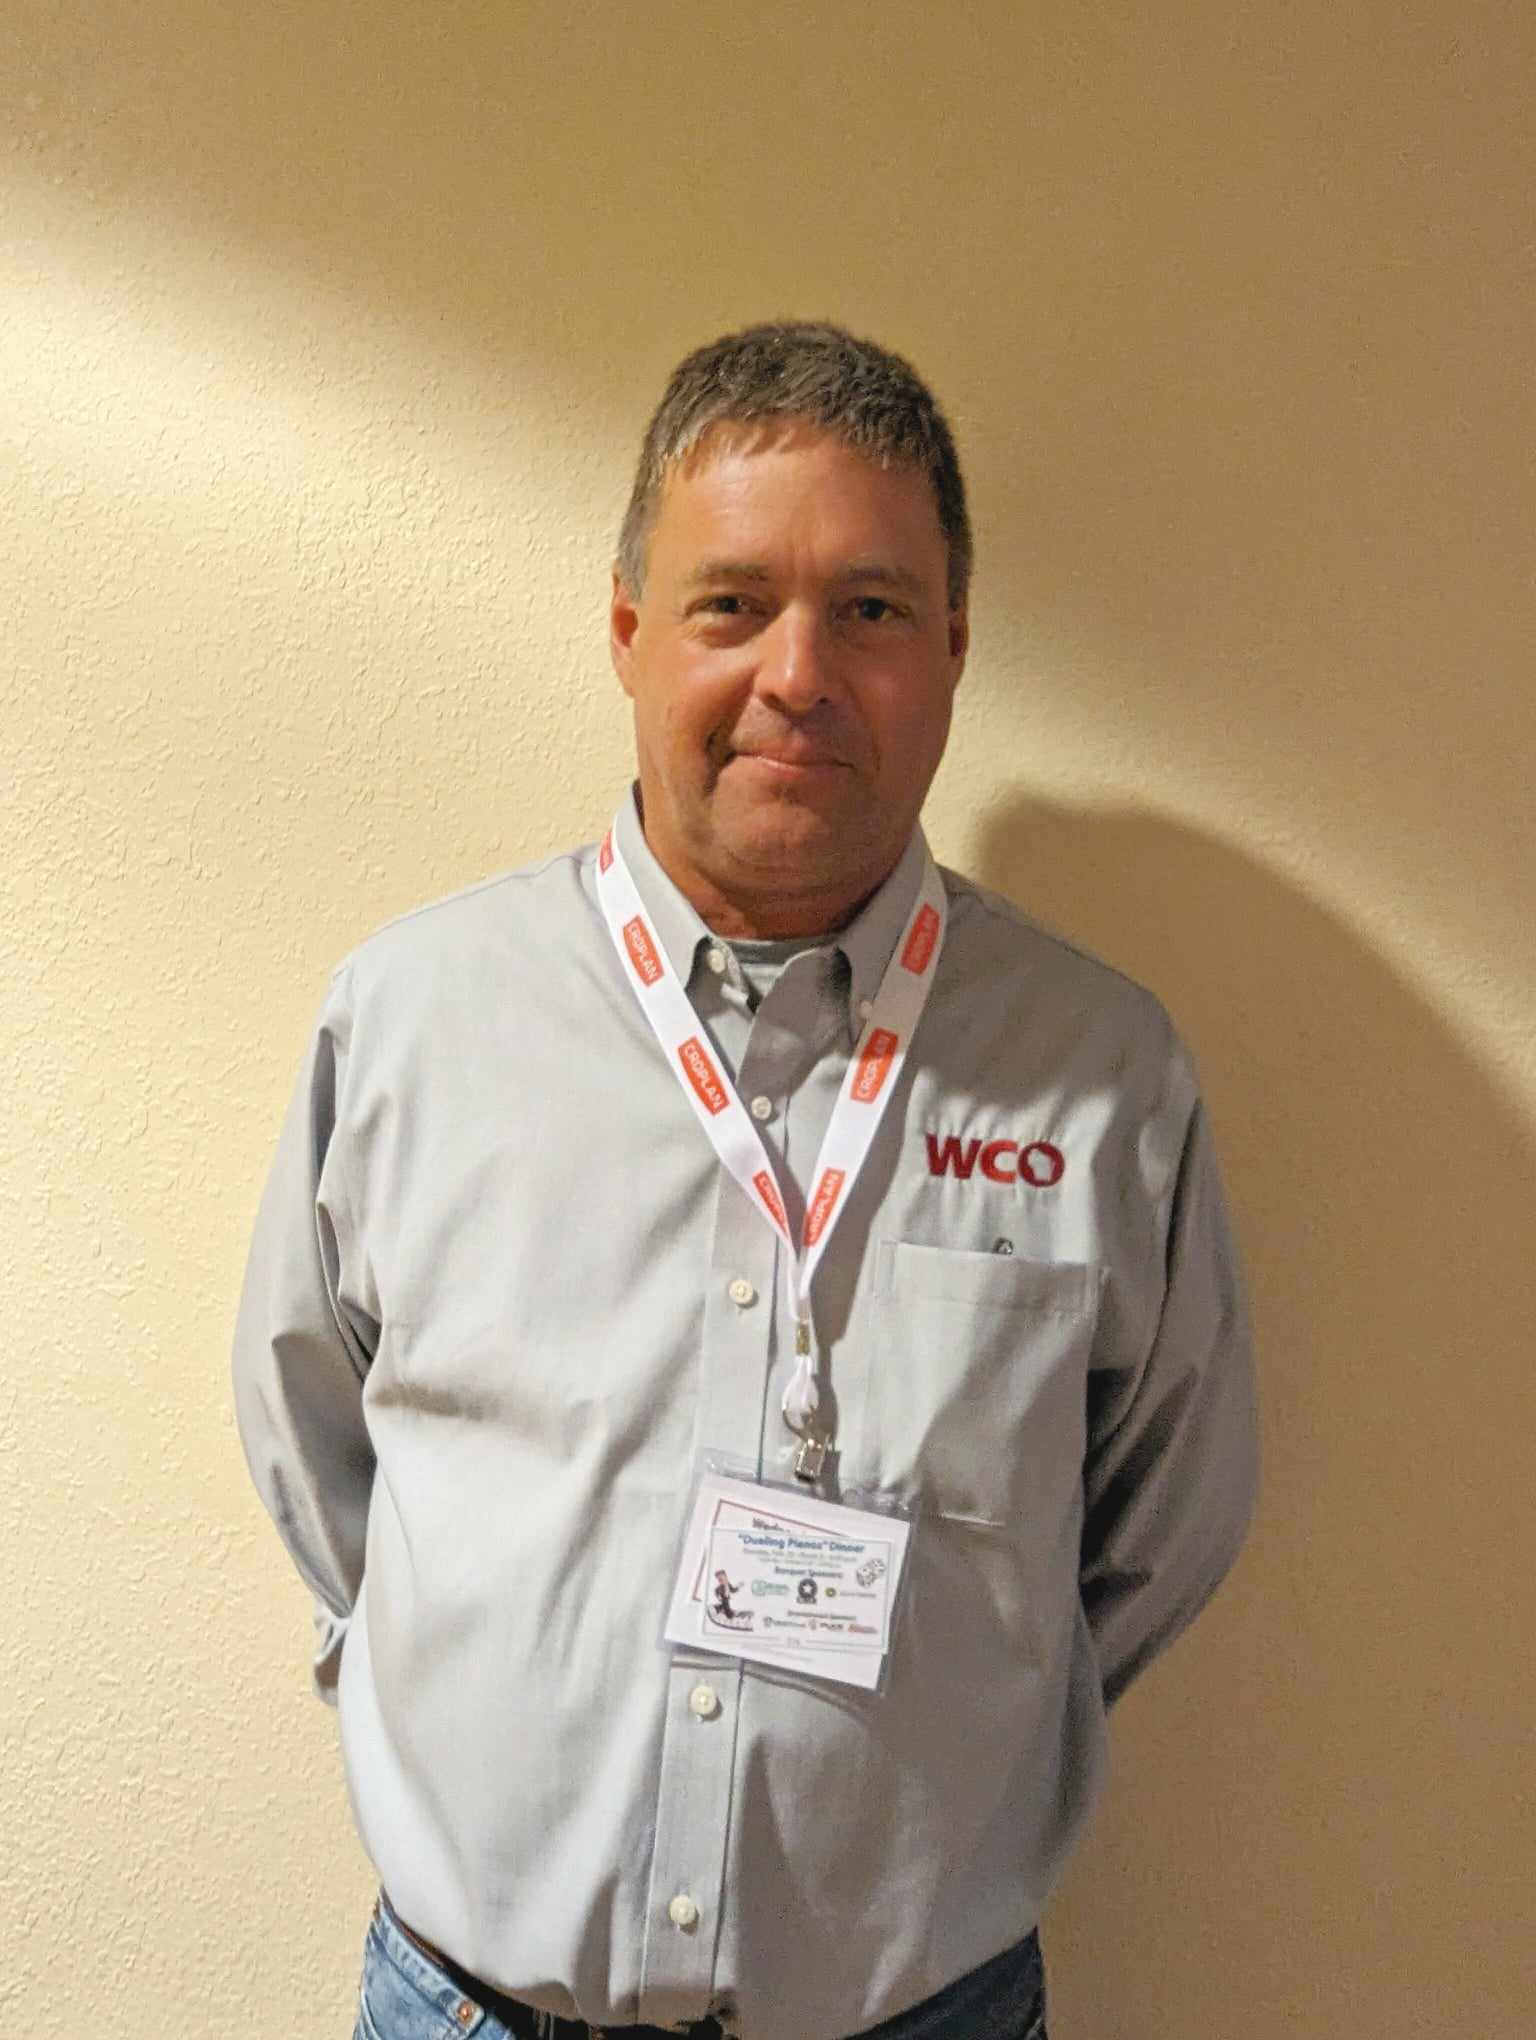 Meet The New President Of Wisconsin Custom Operators: John Osterhaus